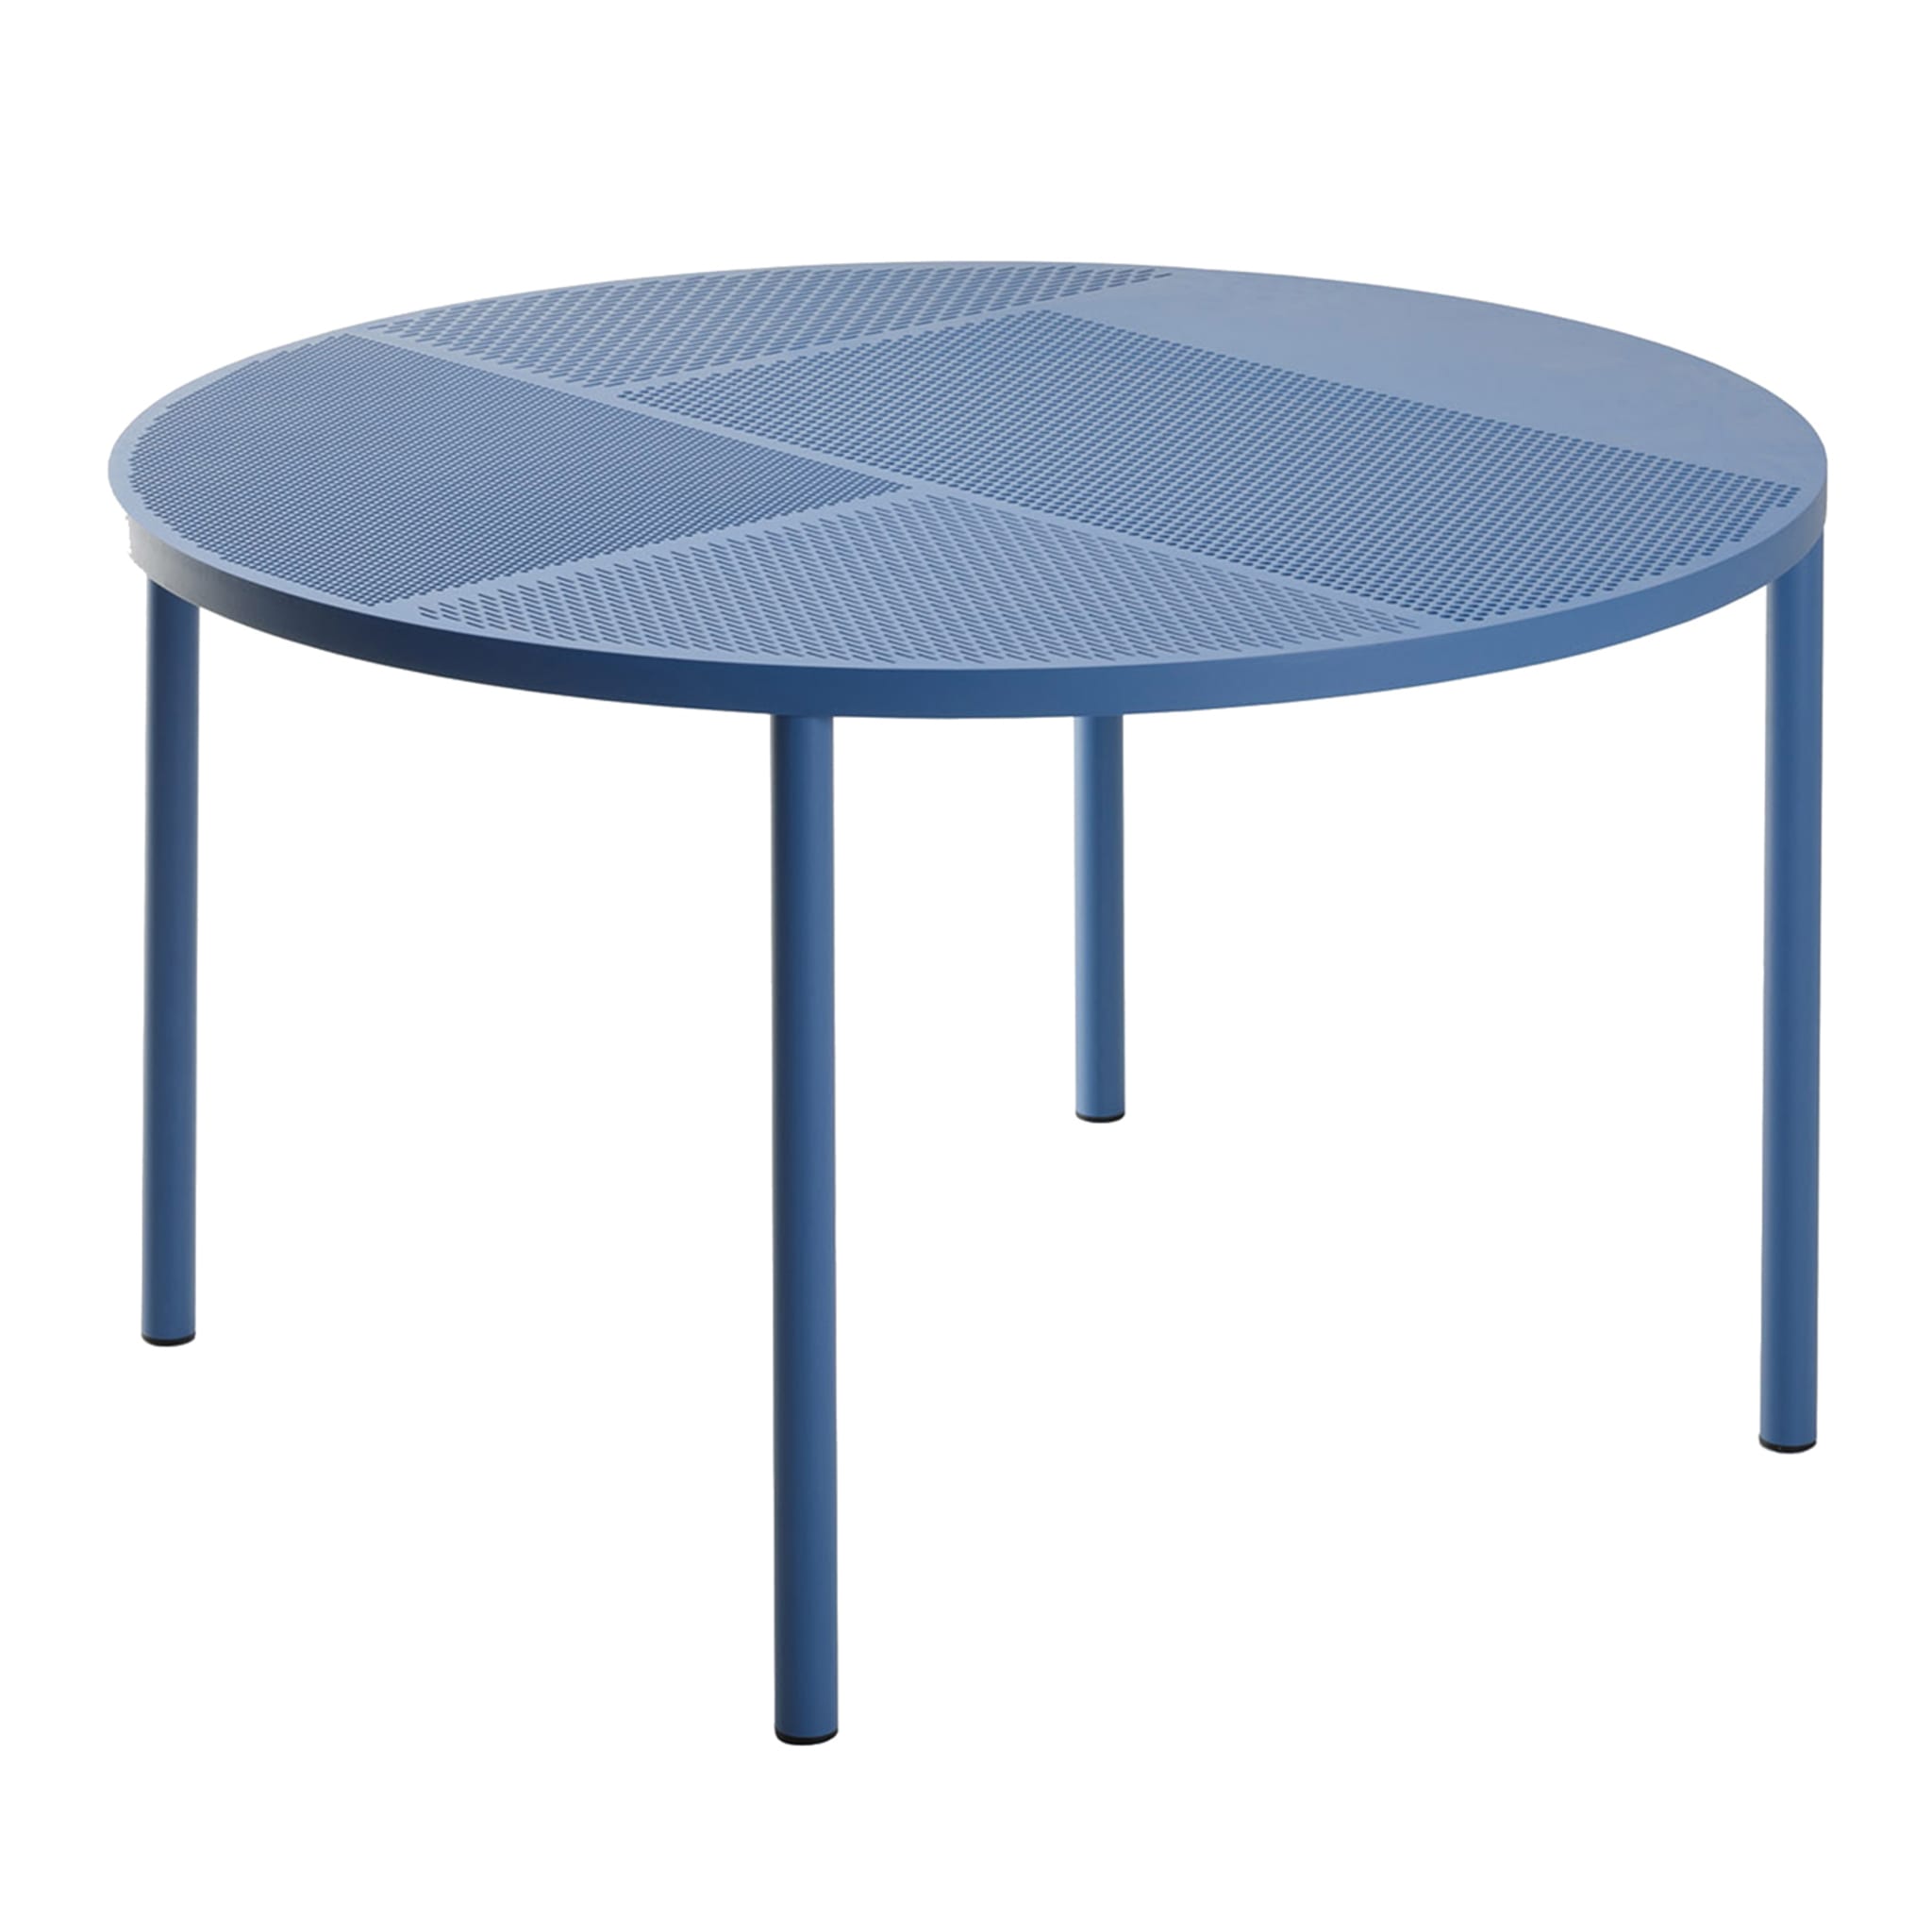 Neo Circular Blue Table - Main view